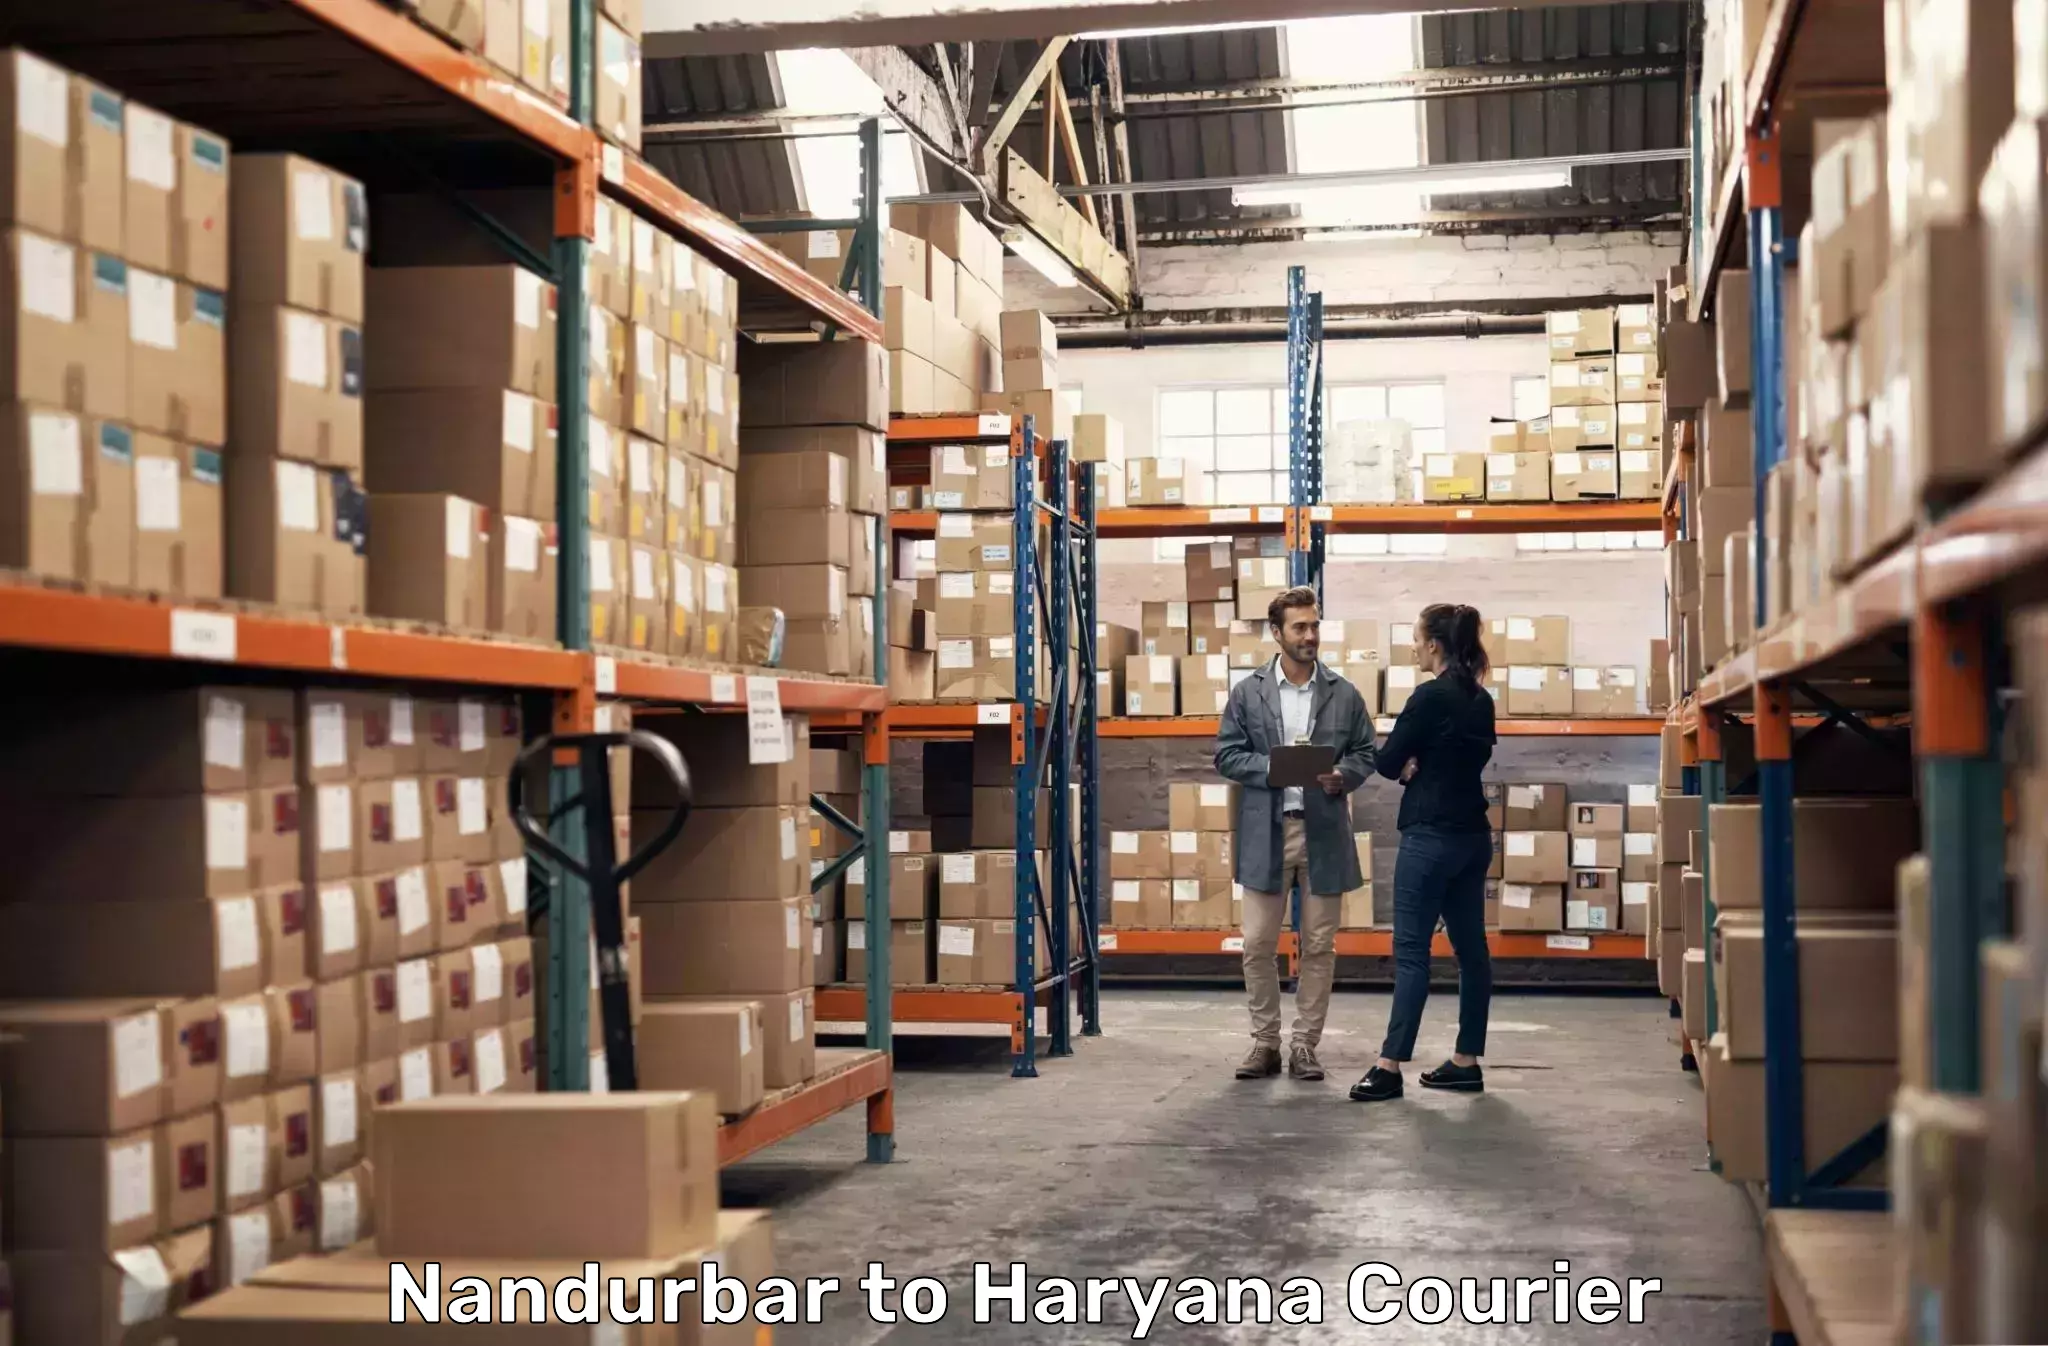 Courier service booking Nandurbar to Gurgaon